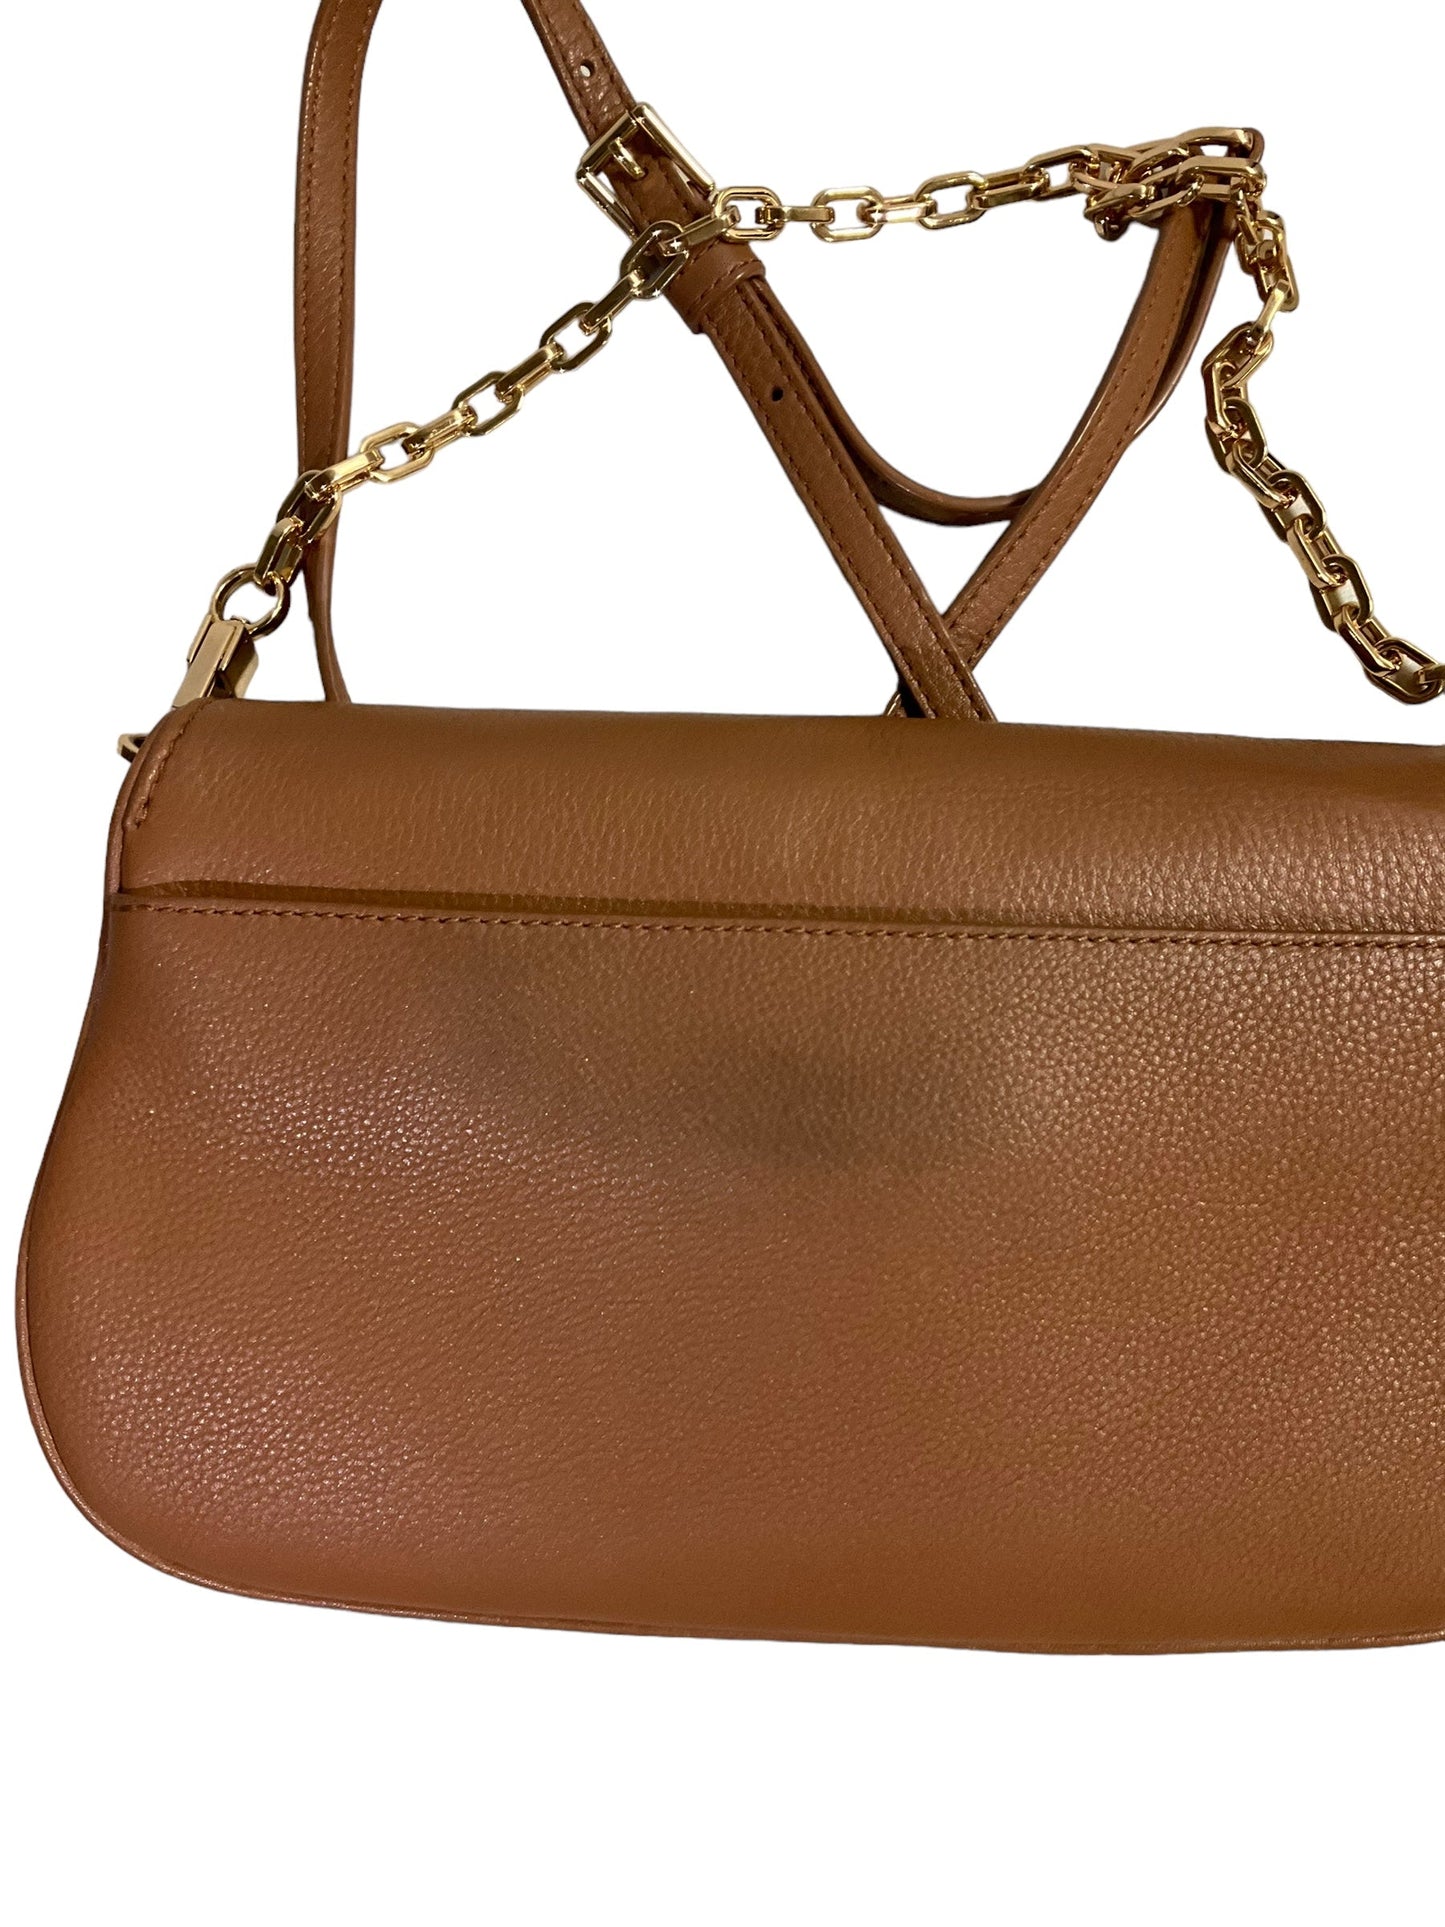 Handbag Designer Tory Burch, Size Small